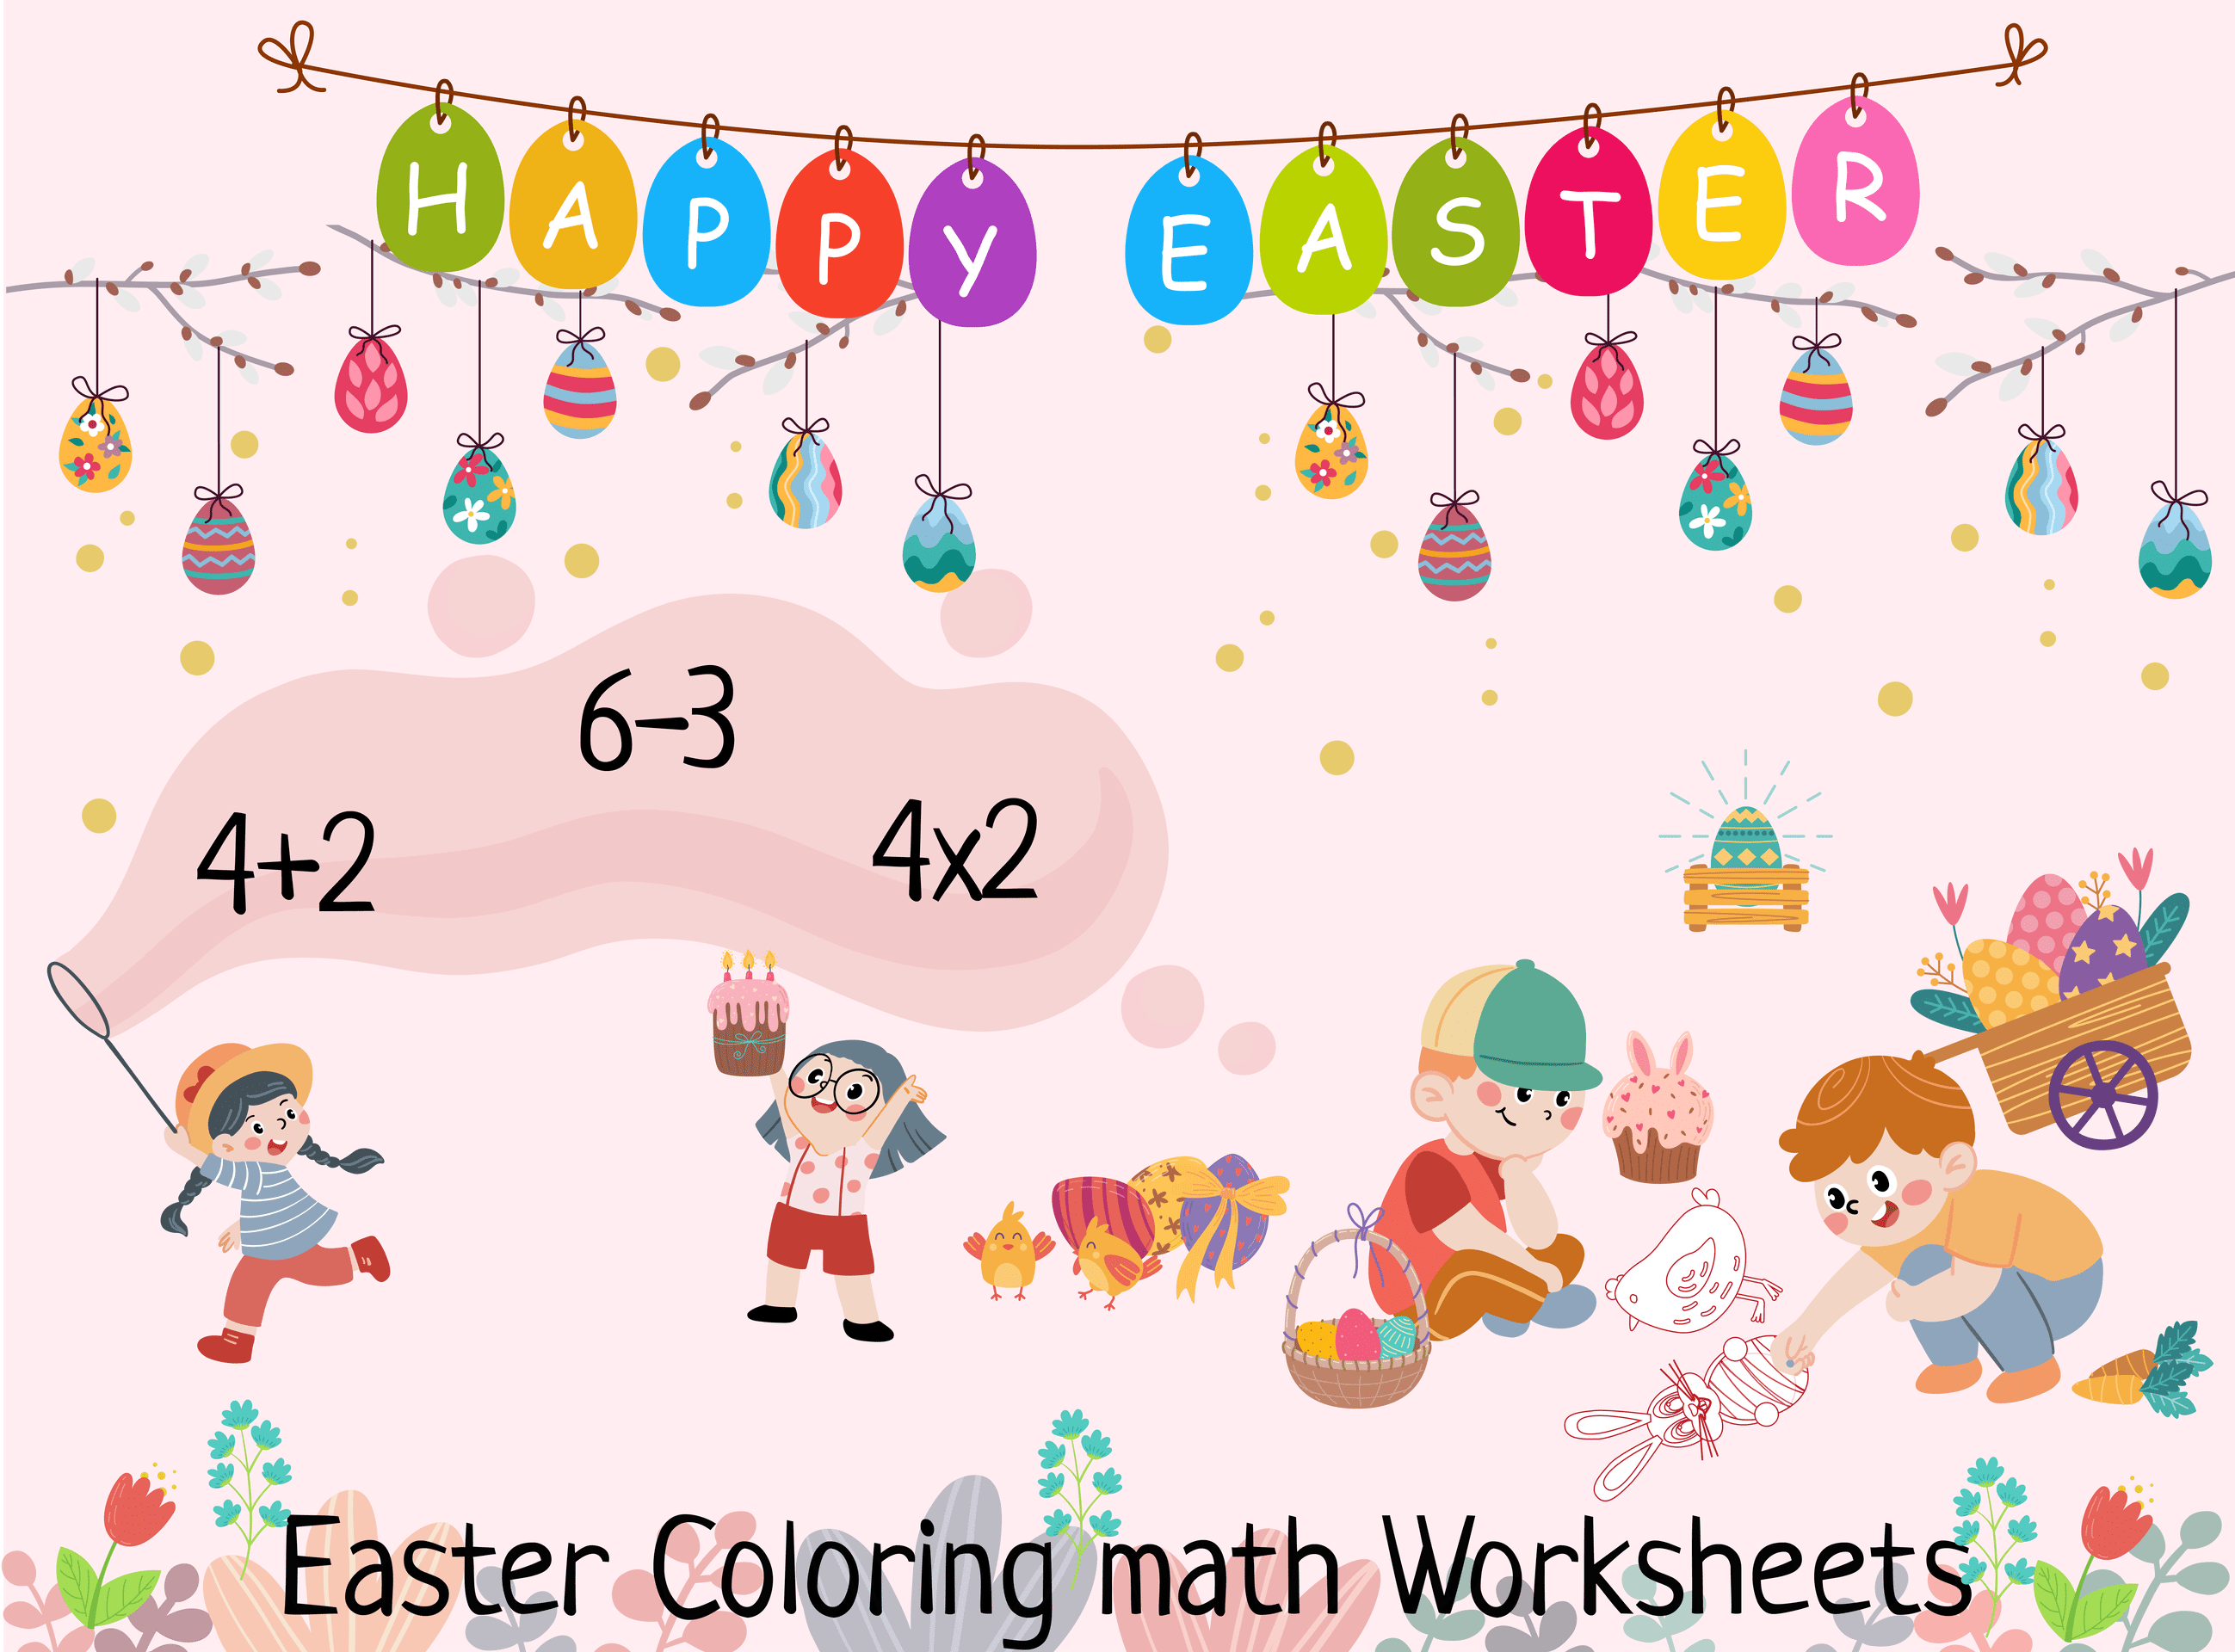 5 Free Easter Coloring Math Worksheets | Fun Printable